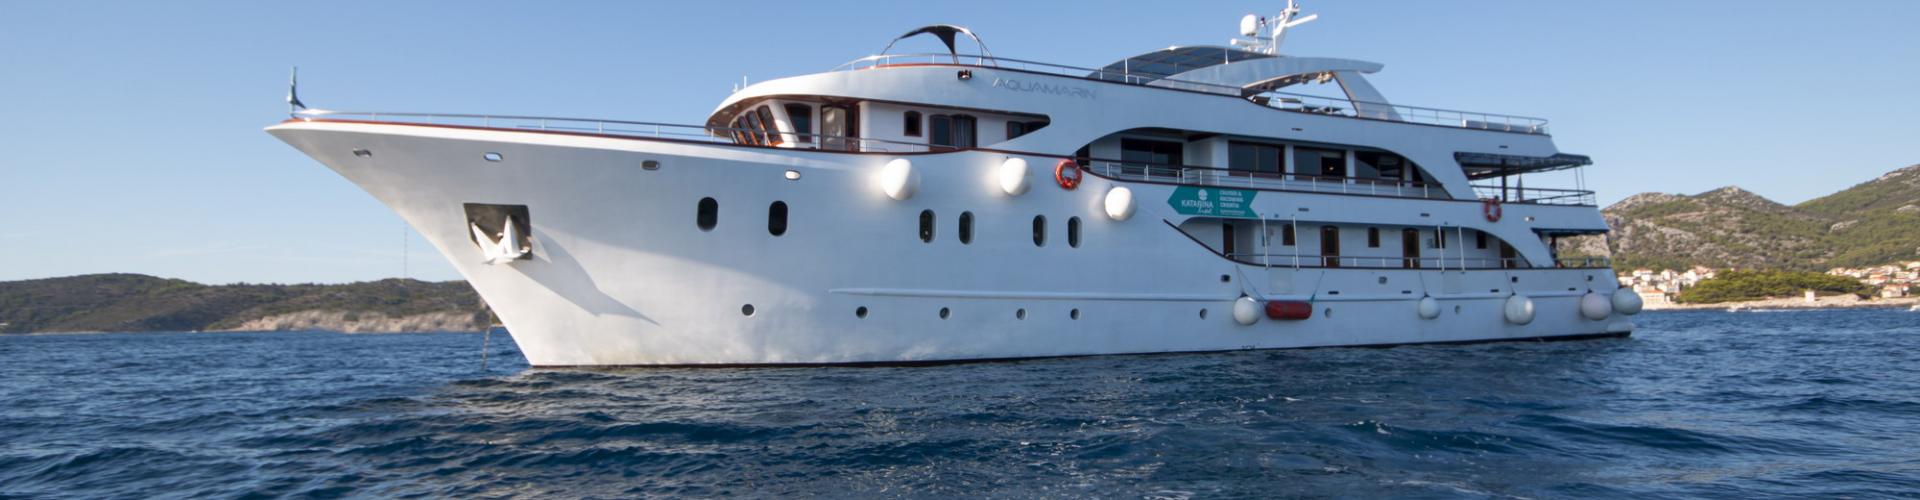 Deluxe kruzer MV Aquamarin- motorna jahta